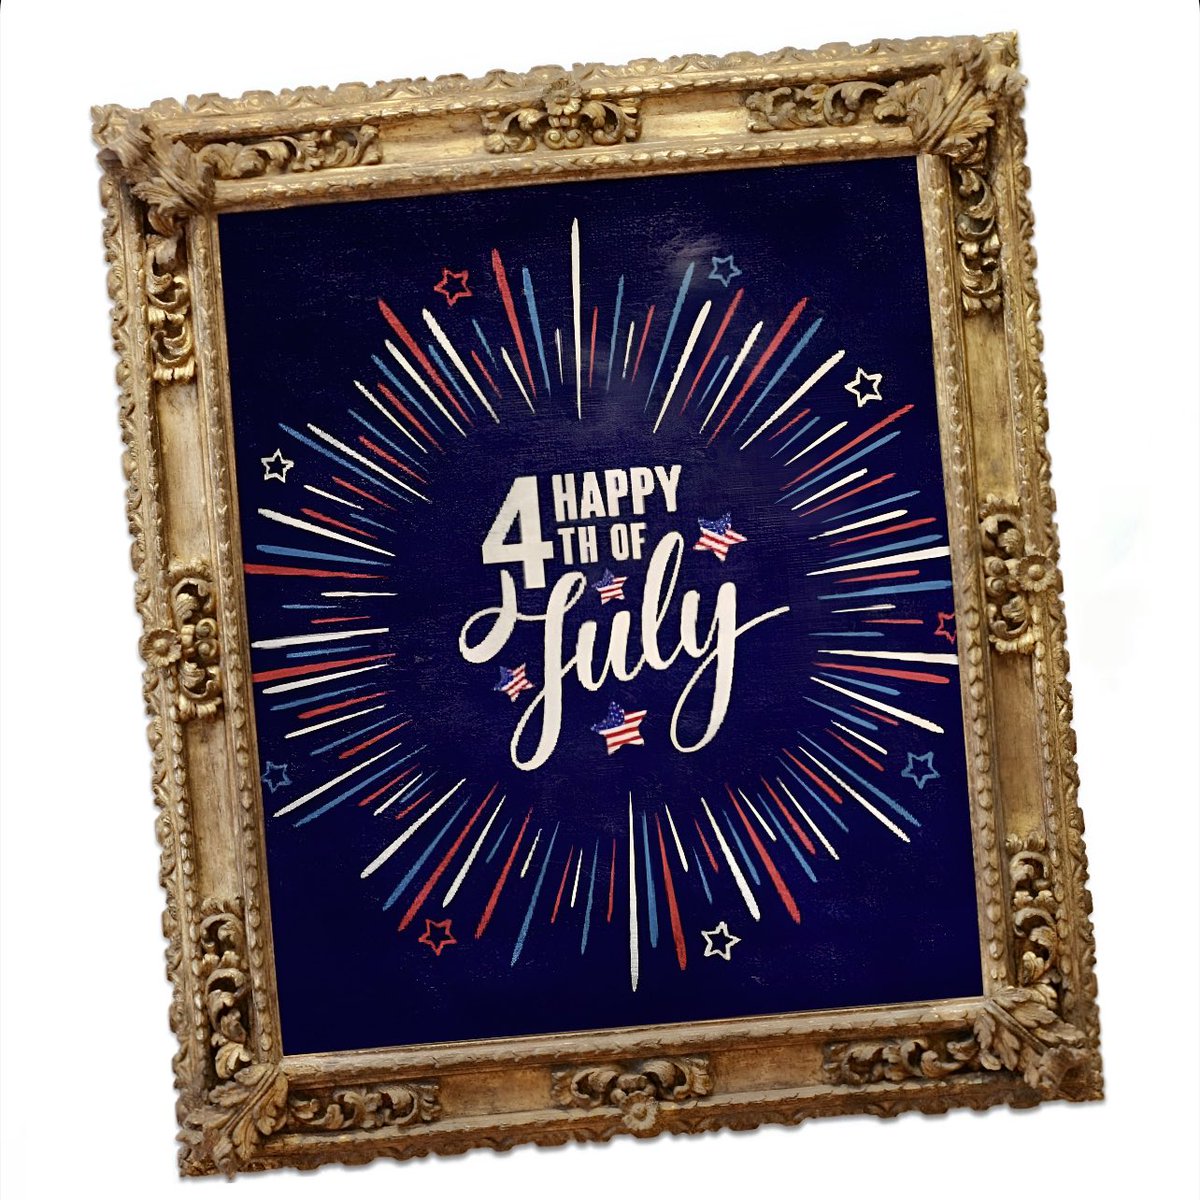 Have a Happy & Safe 4th Of July - Enjoy! 🇺🇸🎉💥#masterpakusa #artworld #artpackaging #masterpak #artsy  #fineartintransit #printpak #preserveart #artshipping #artlife #summer #4thofjulyweekend #artonthemove #Happy4th #specializedpackaging #happy4thofjuly